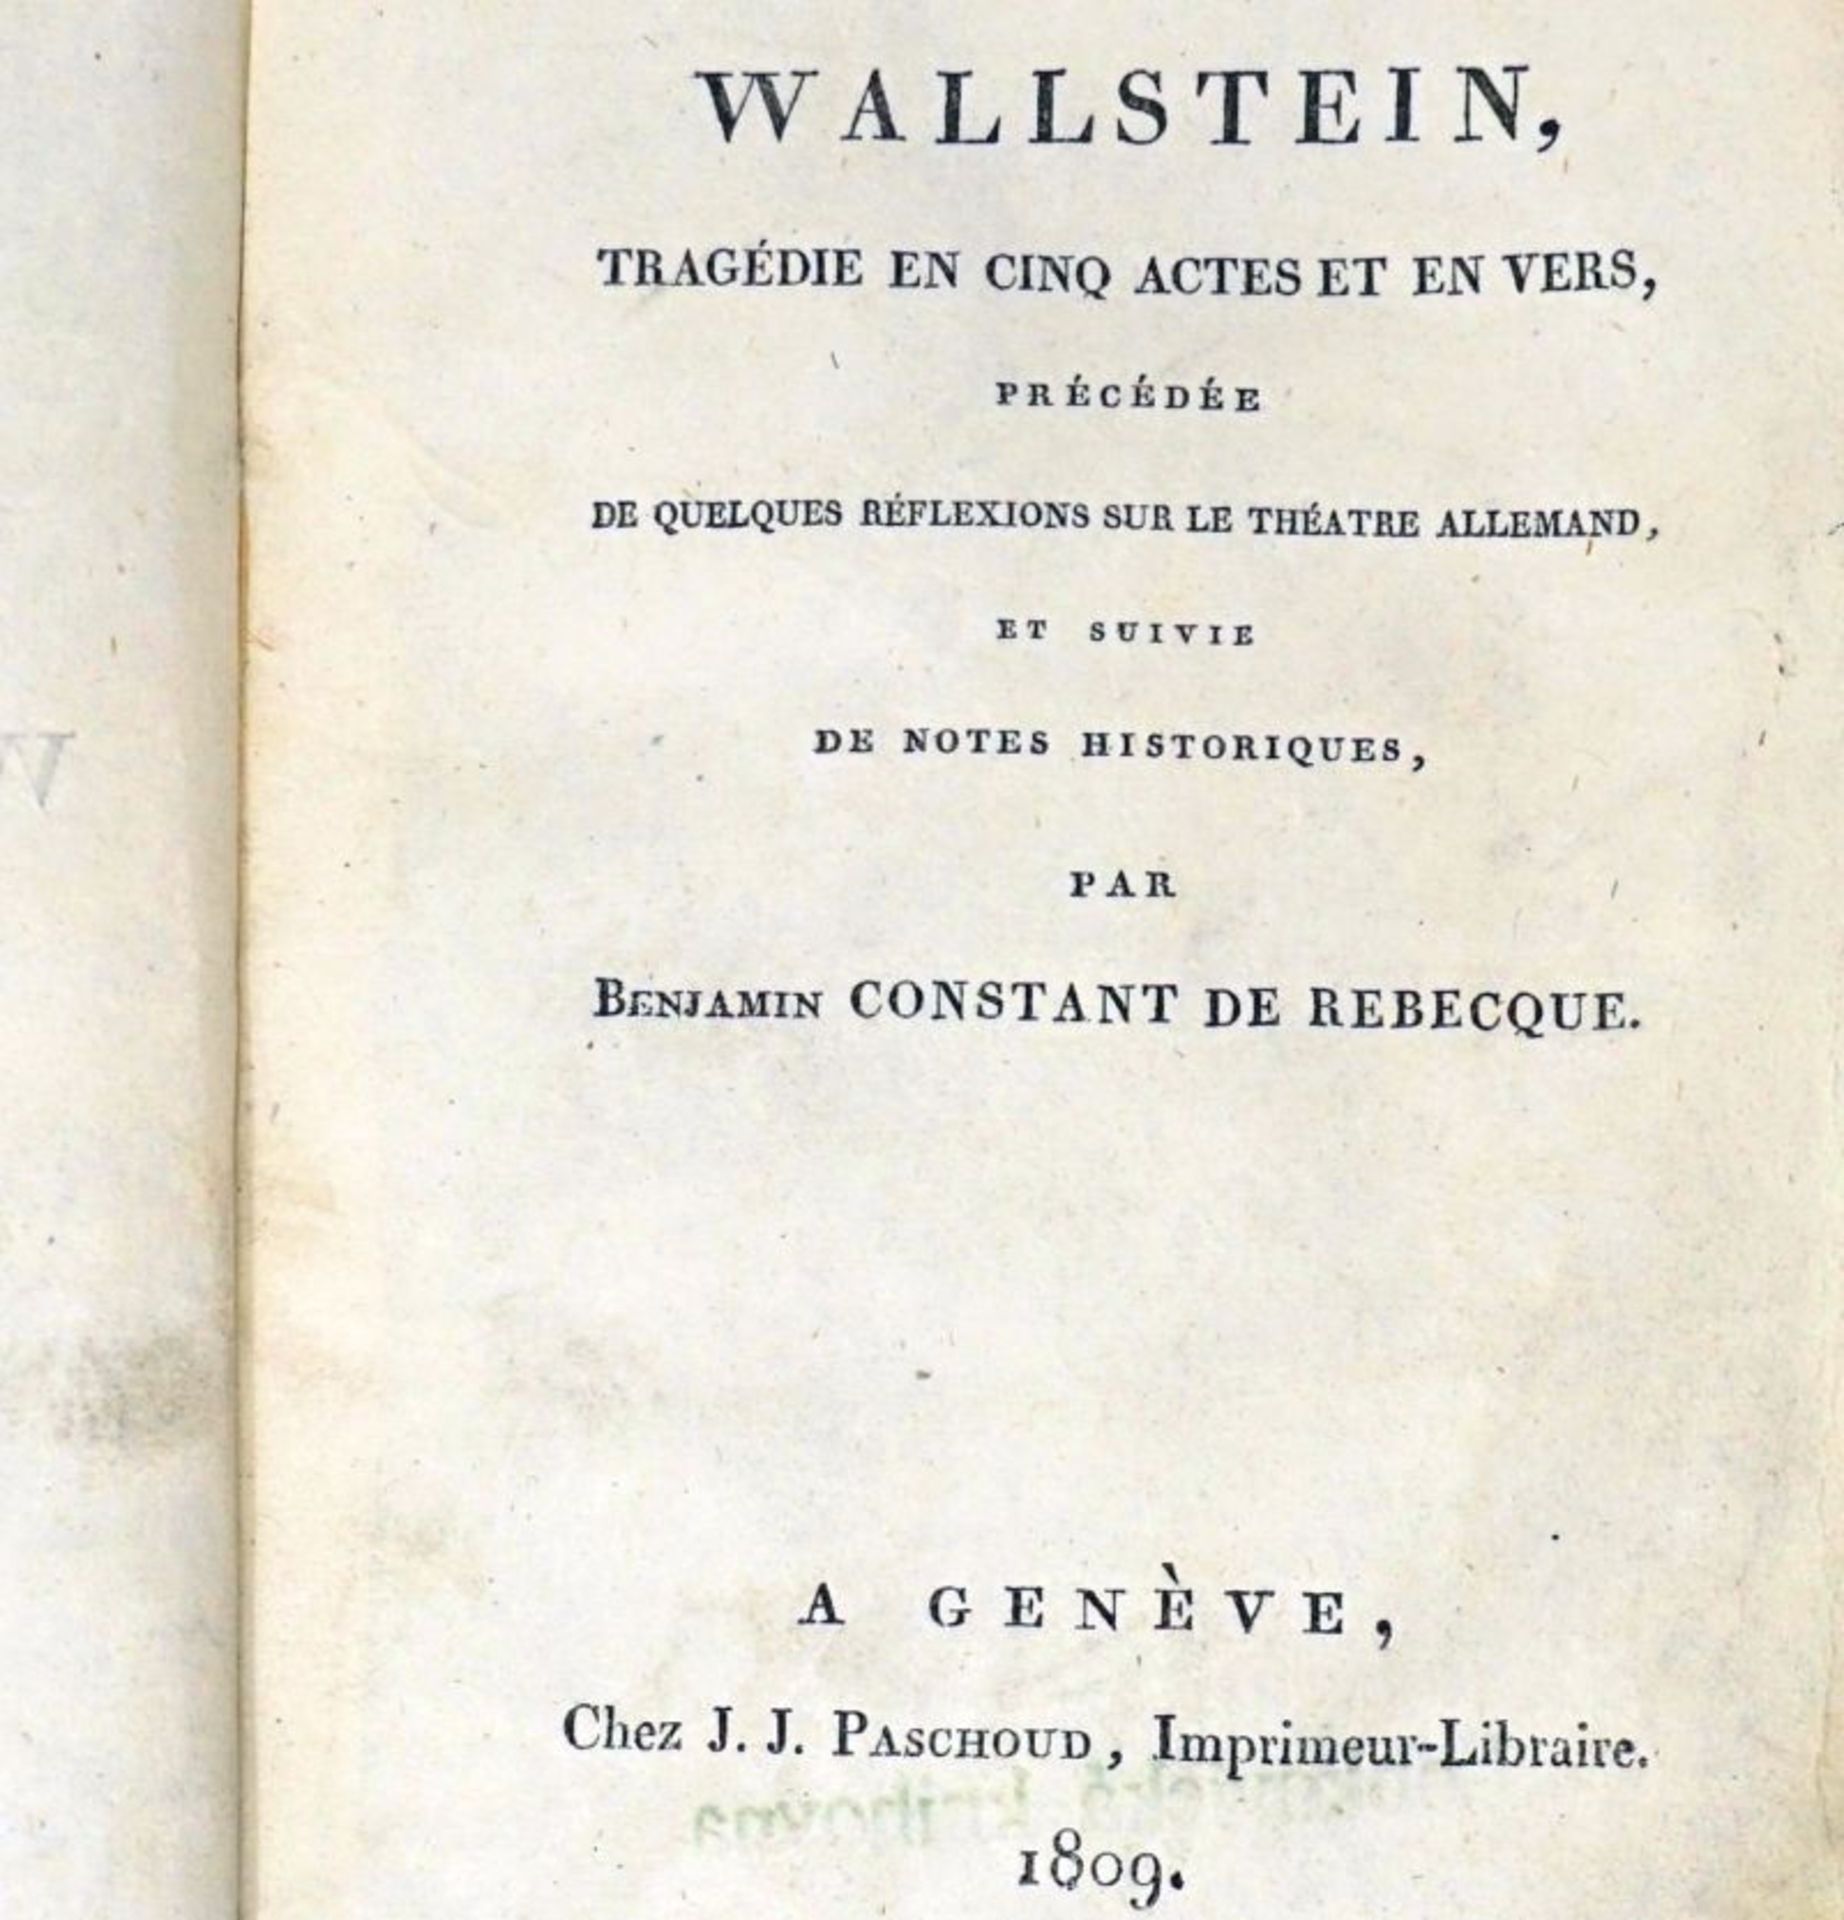 Constant de Rebecque, B. de und Sch...: Wallstein, tragédie en cinq actes et en vers